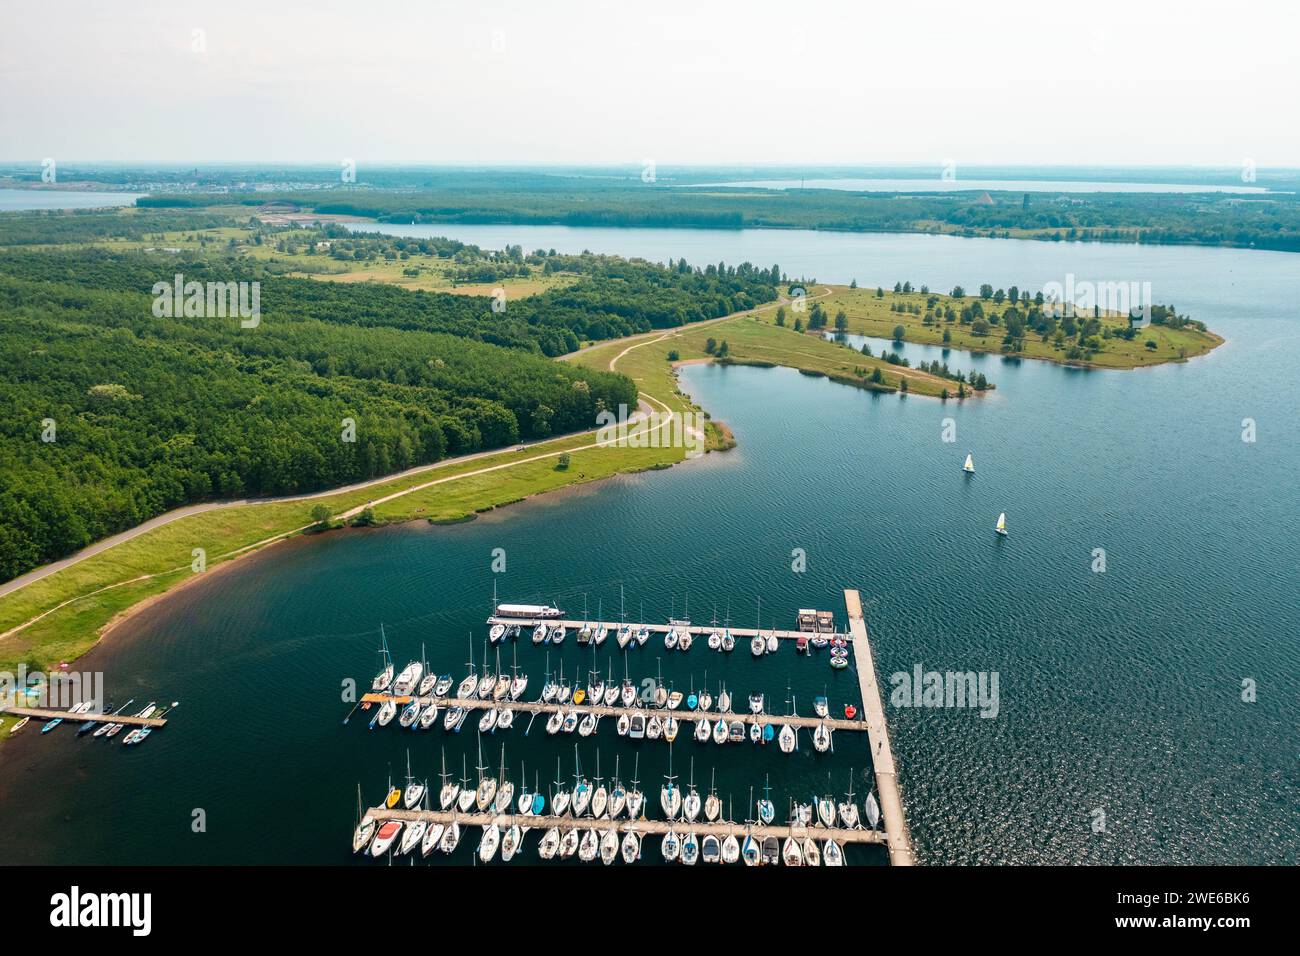 Germany, Saxony, Leipzig, Aerial view of marina on Cospudener See lake Stock Photo